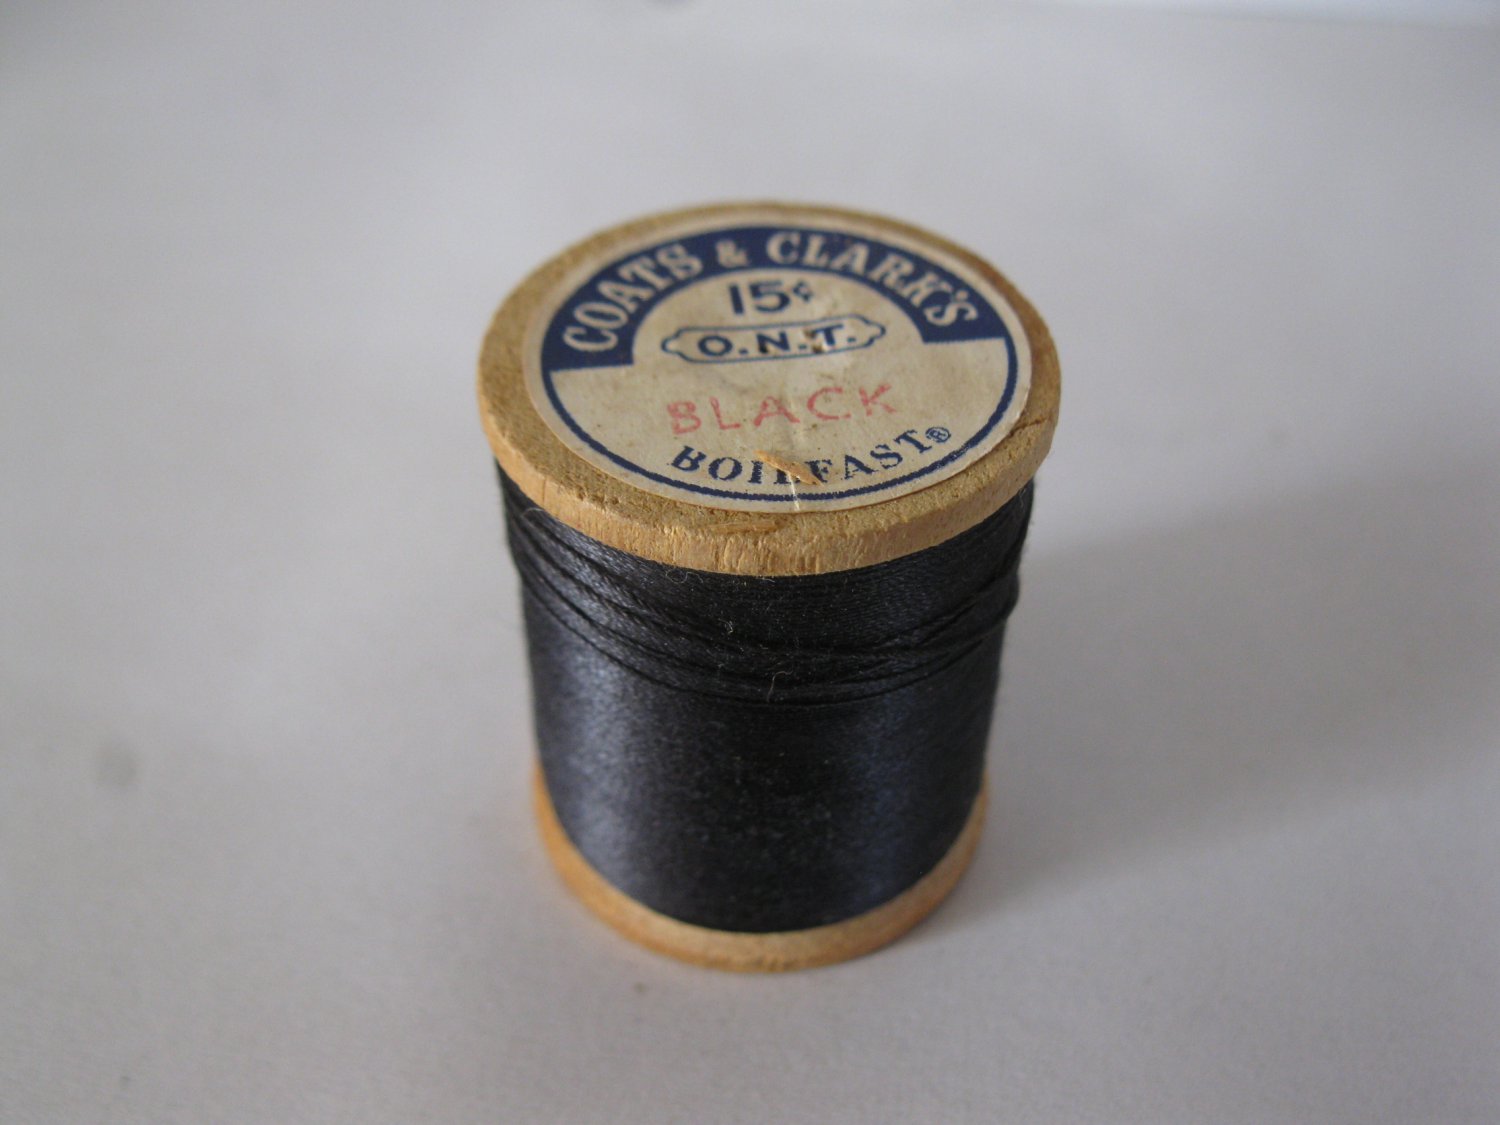 #21 old wood Spool w/ Thread: Coat's & Clark's Boilfast - Black